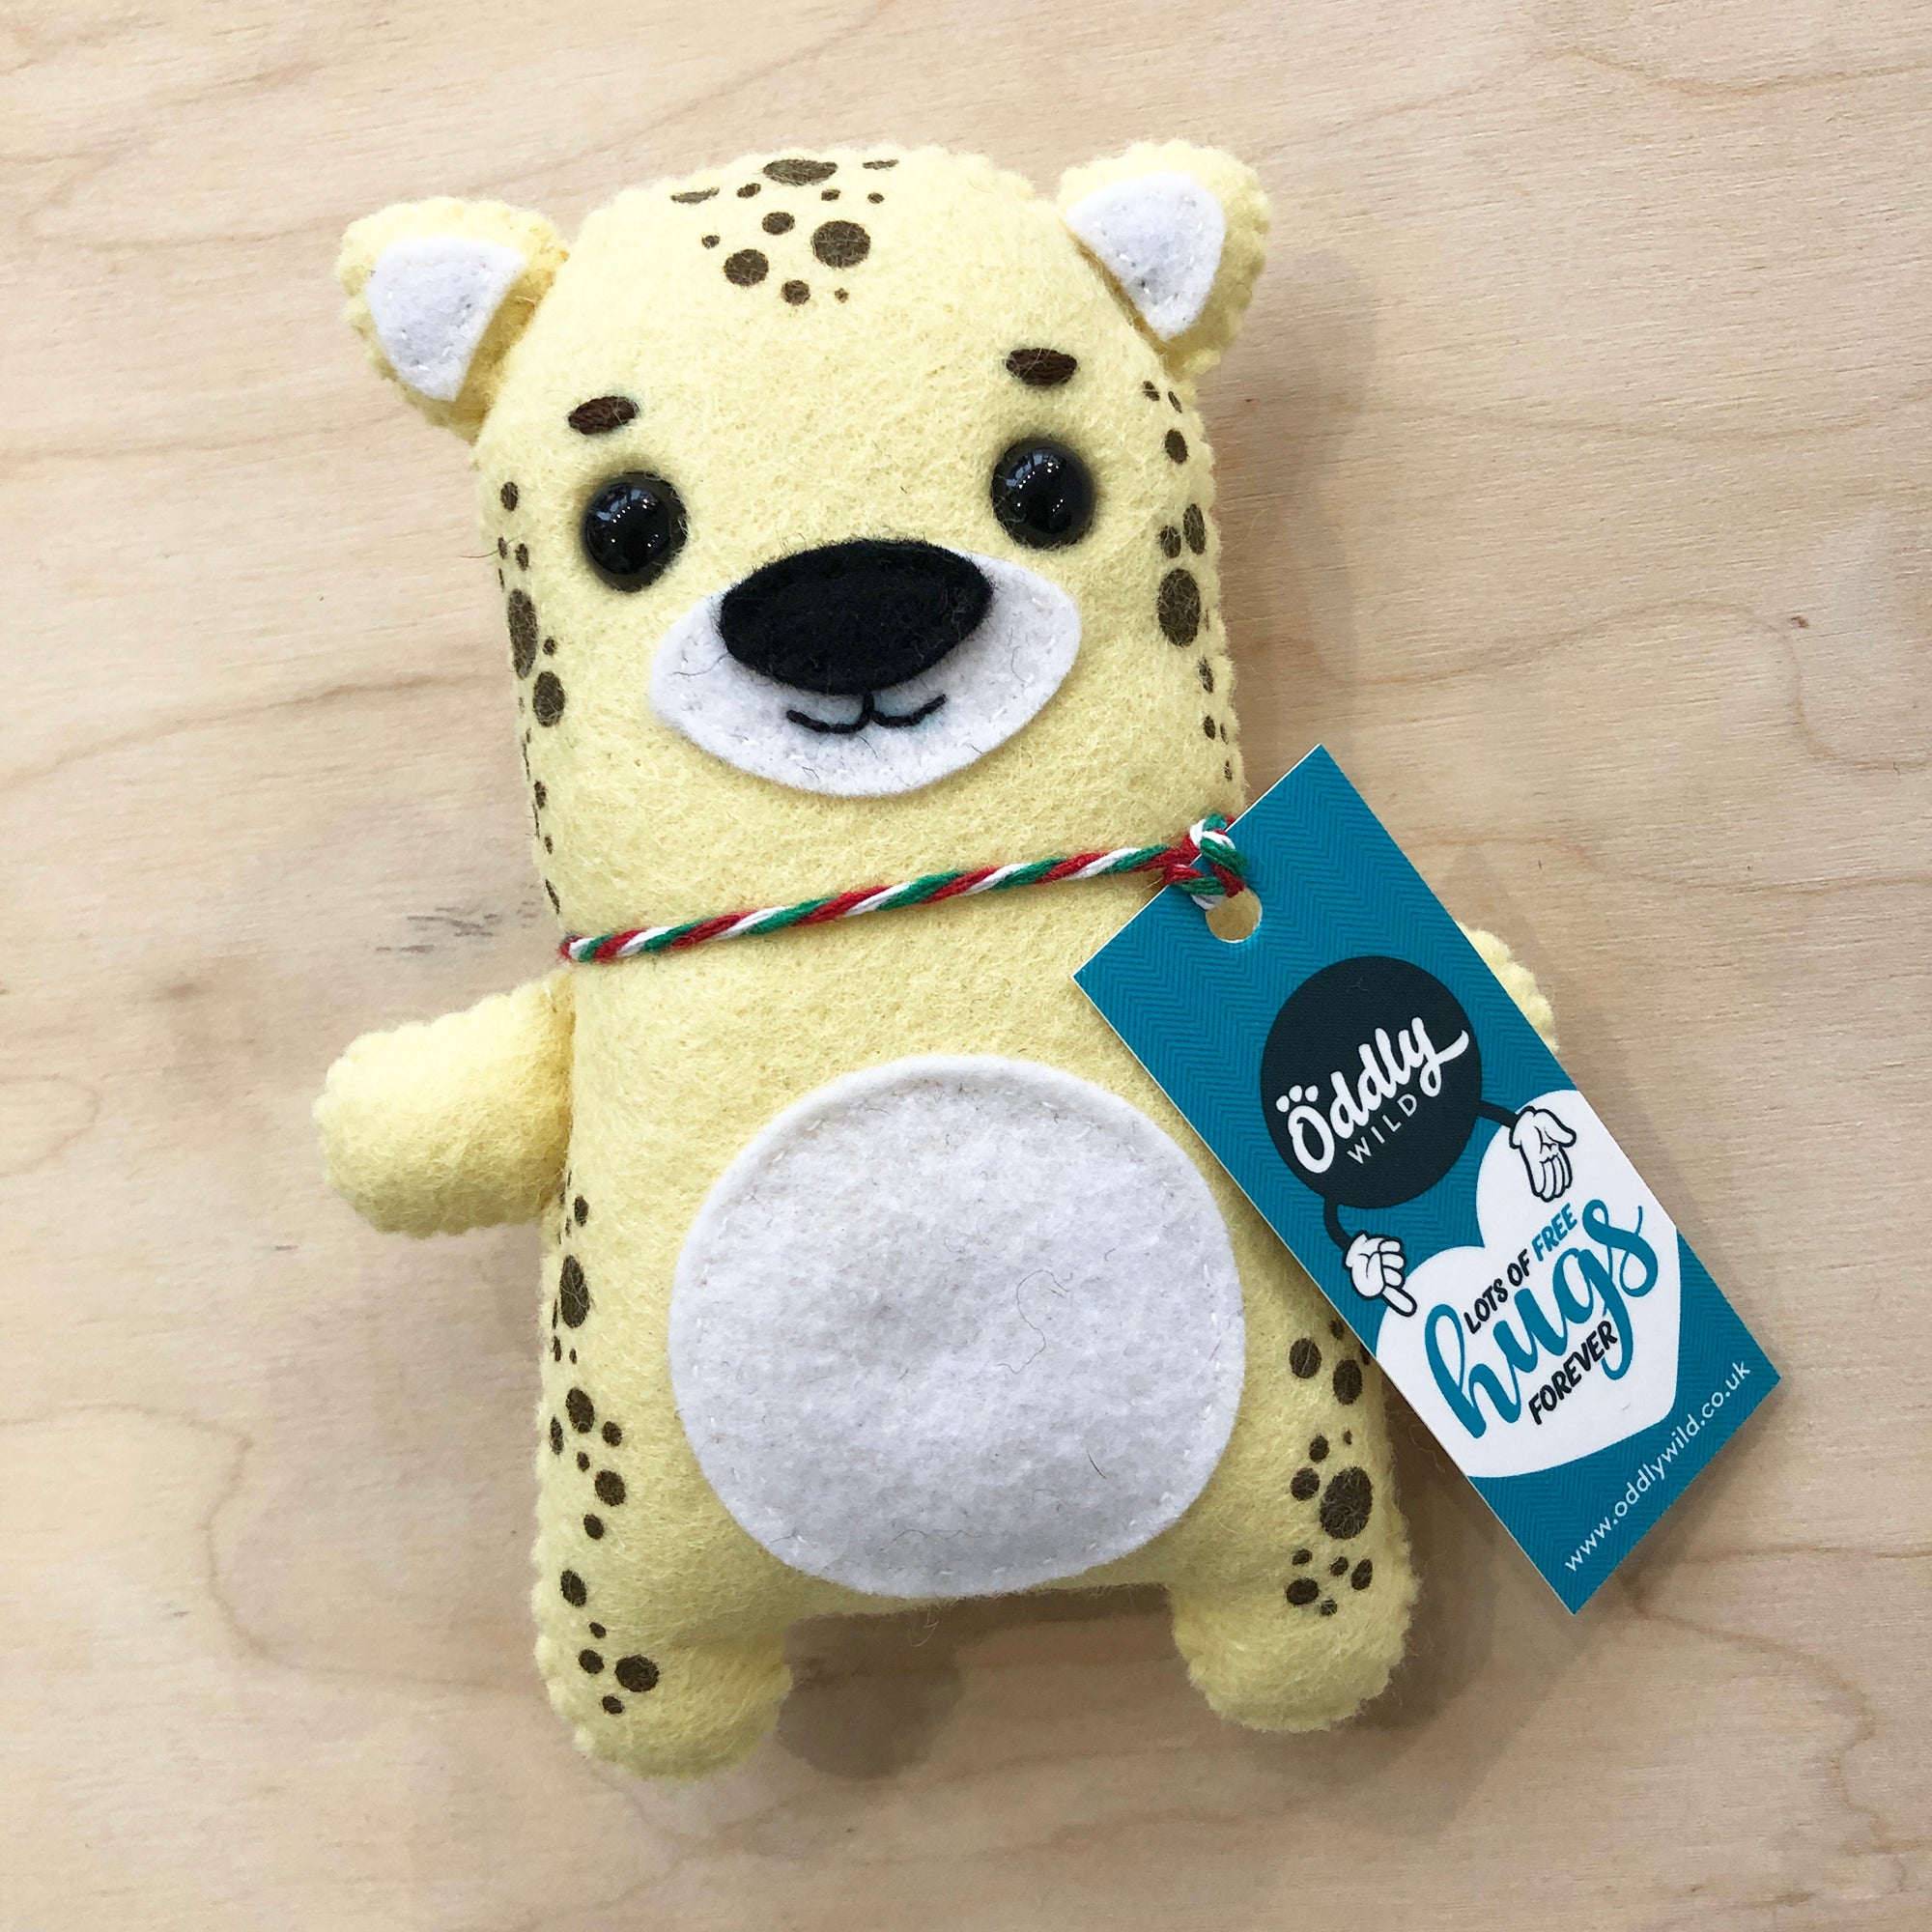 Snow Leopard huggle toy